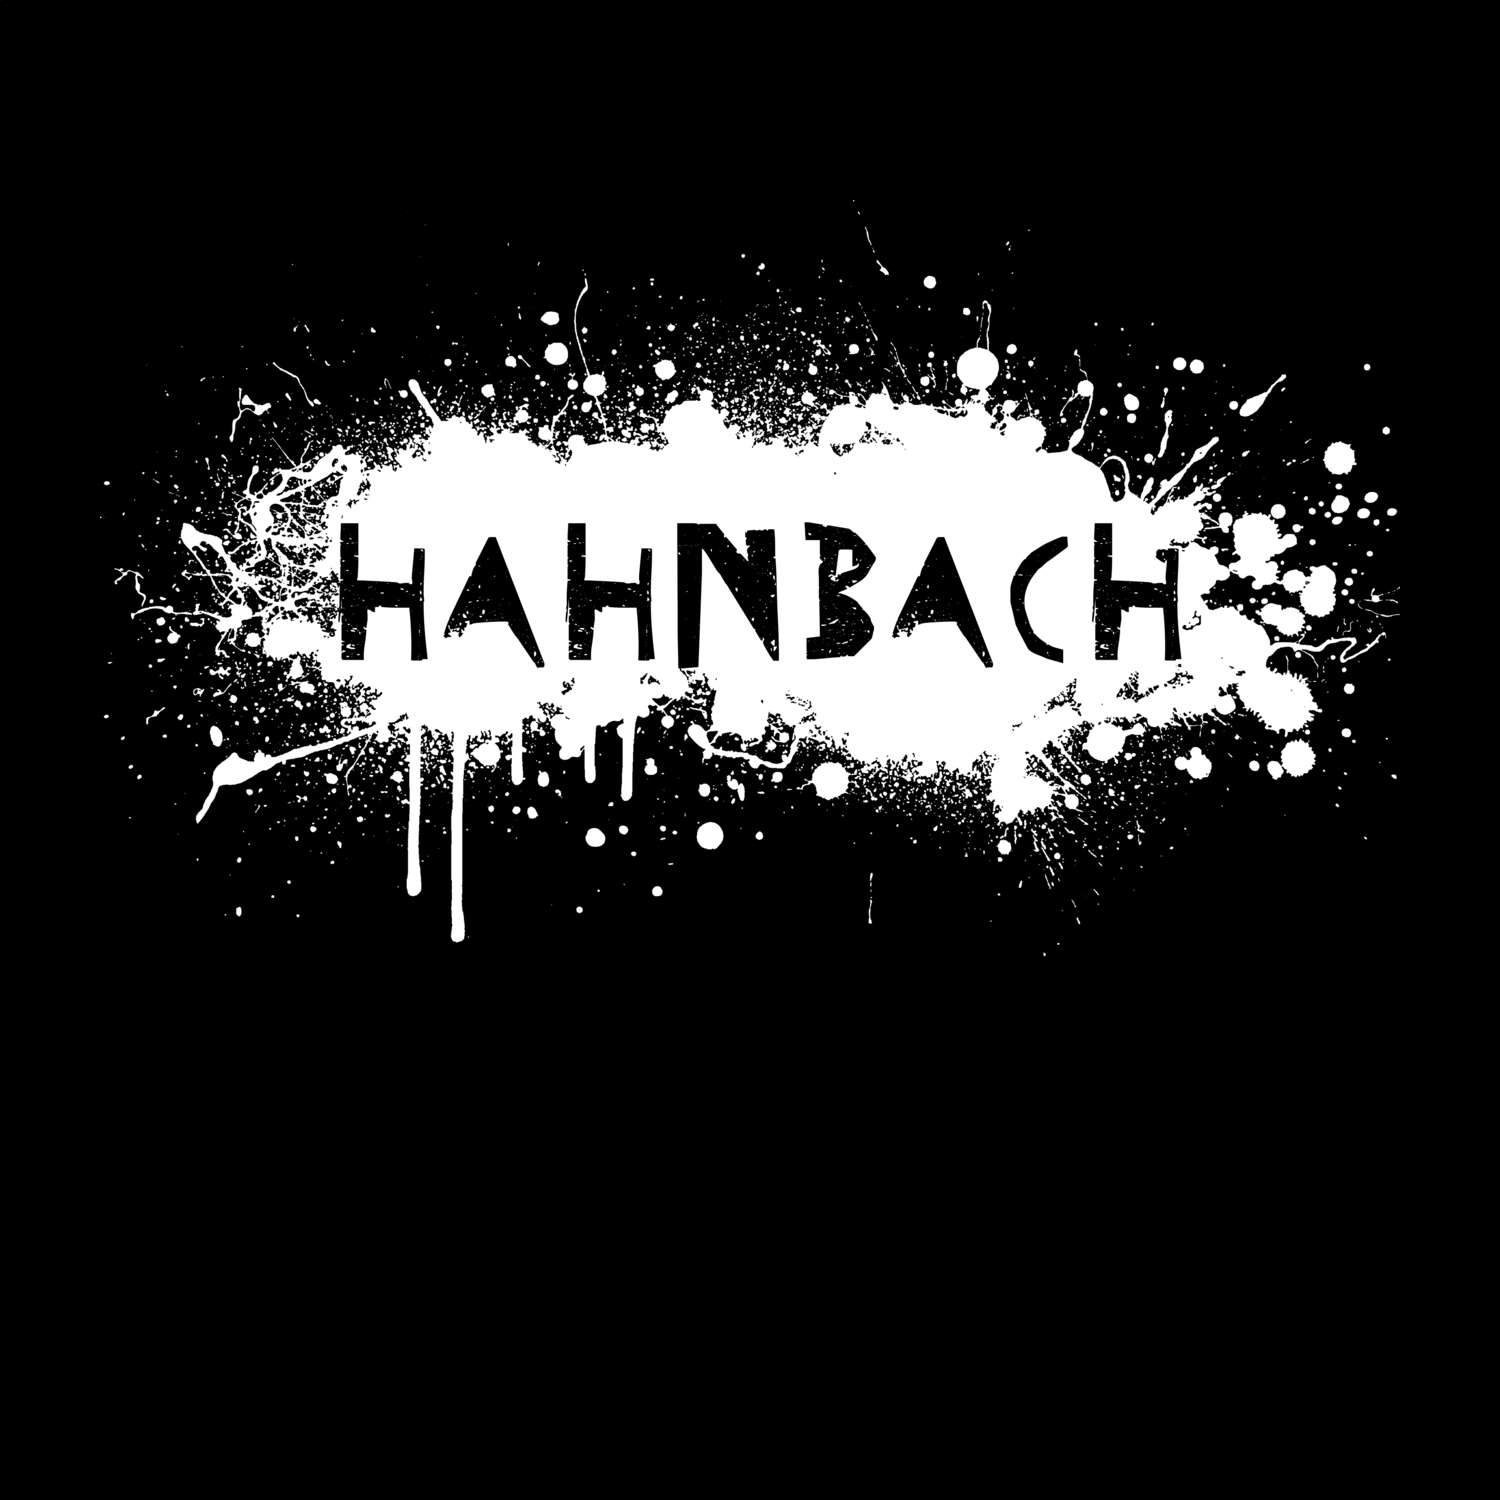 Hahnbach T-Shirt »Paint Splash Punk«